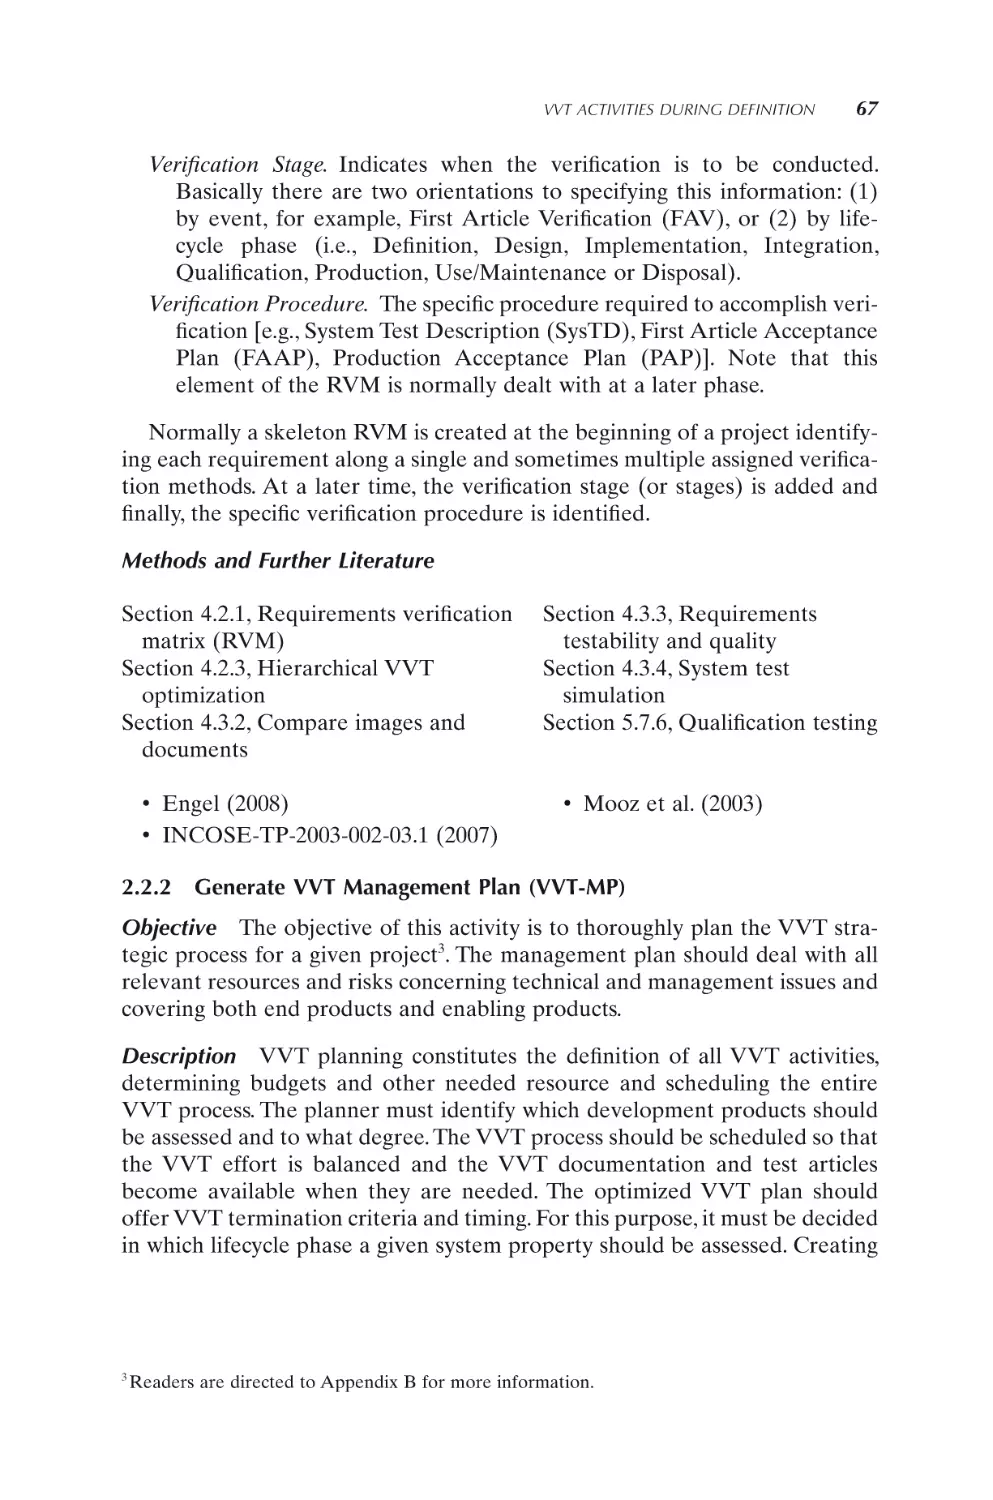 2.2.2 Generate VVT Management Plan (VVT-MP)